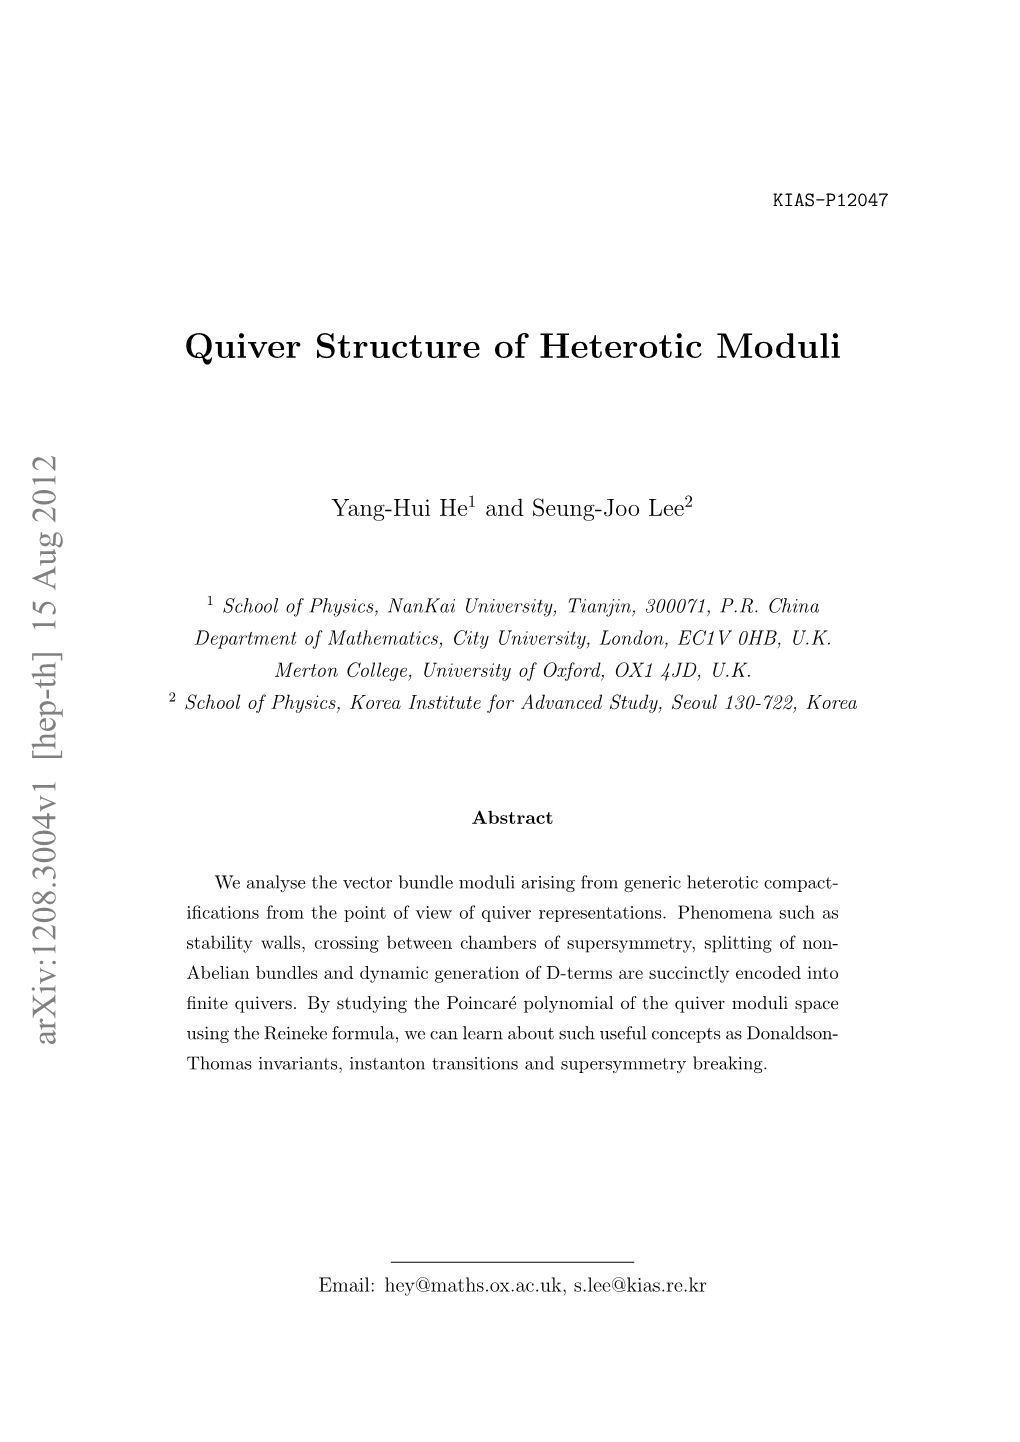 Quiver Structure of Heterotic Moduli Arxiv:1208.3004V1 [Hep-Th] 15 Aug